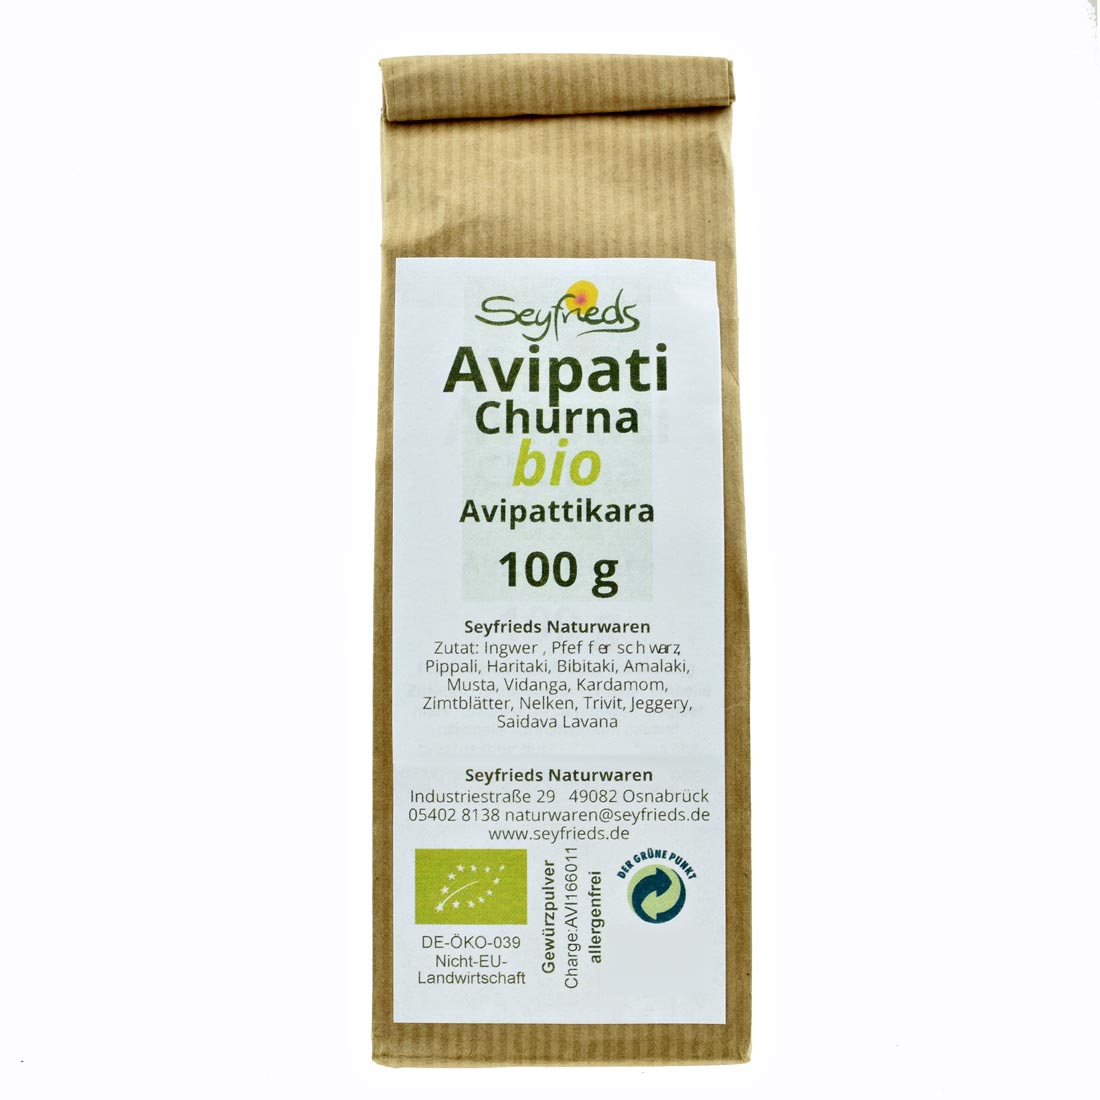 Avipattikara Churna bio 100 g Seyfrieds